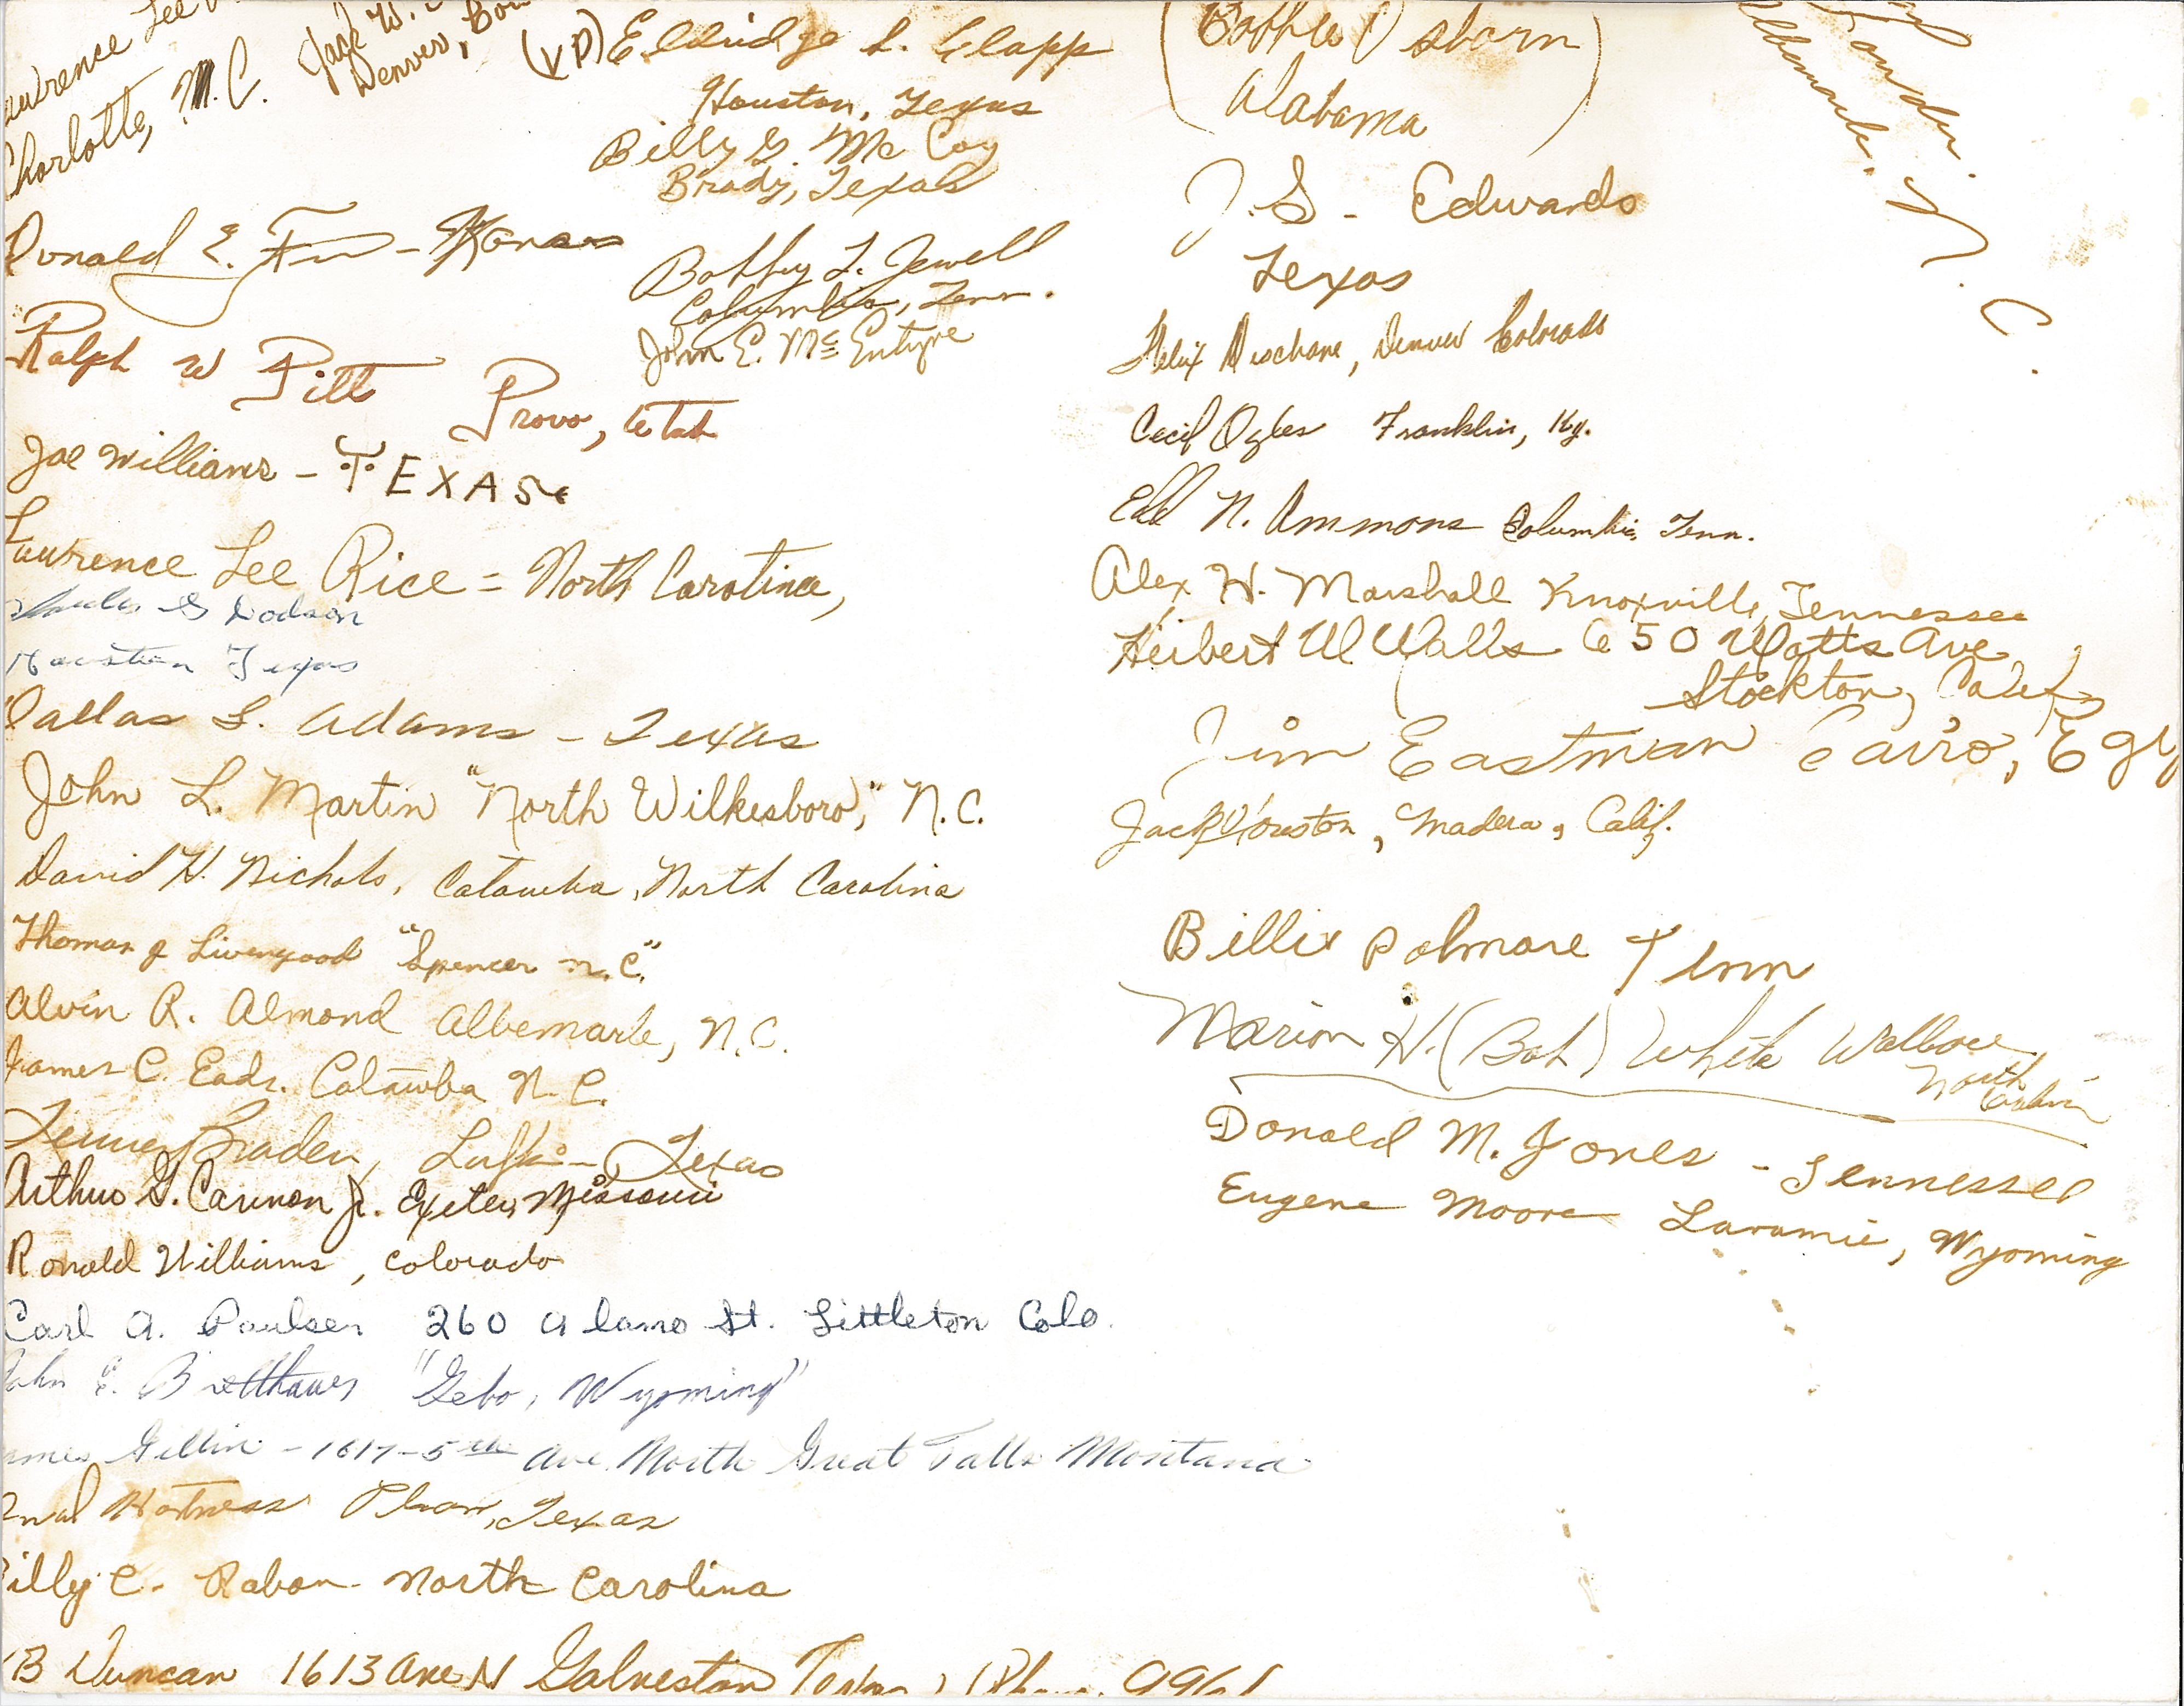 McMeece Naval Training Center Co 316, graduation signatures 20 Aug 1948